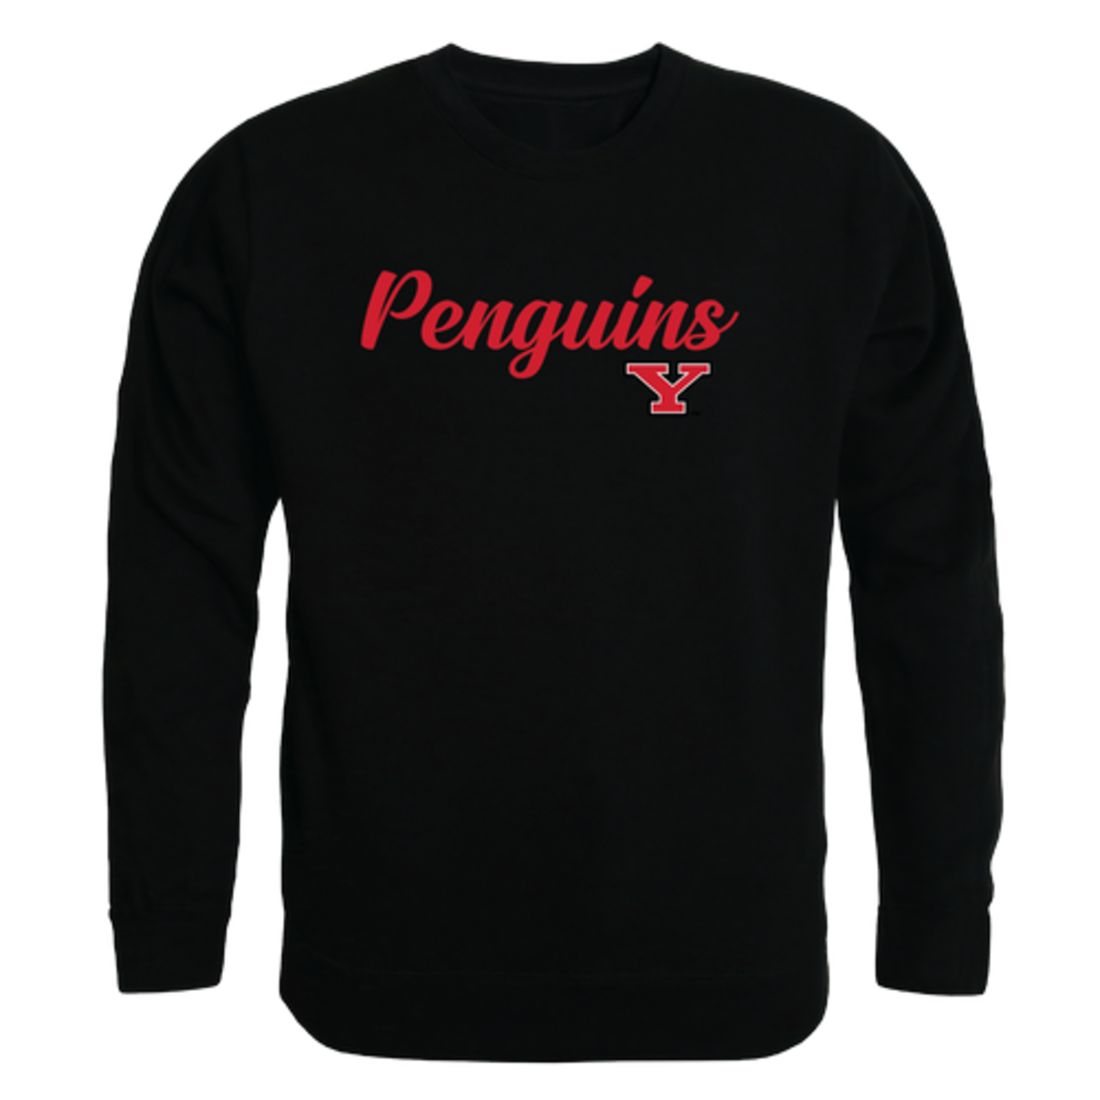 YSU Youngstown State University Penguins Script Crewneck Pullover Sweatshirt Sweater Black-Campus-Wardrobe